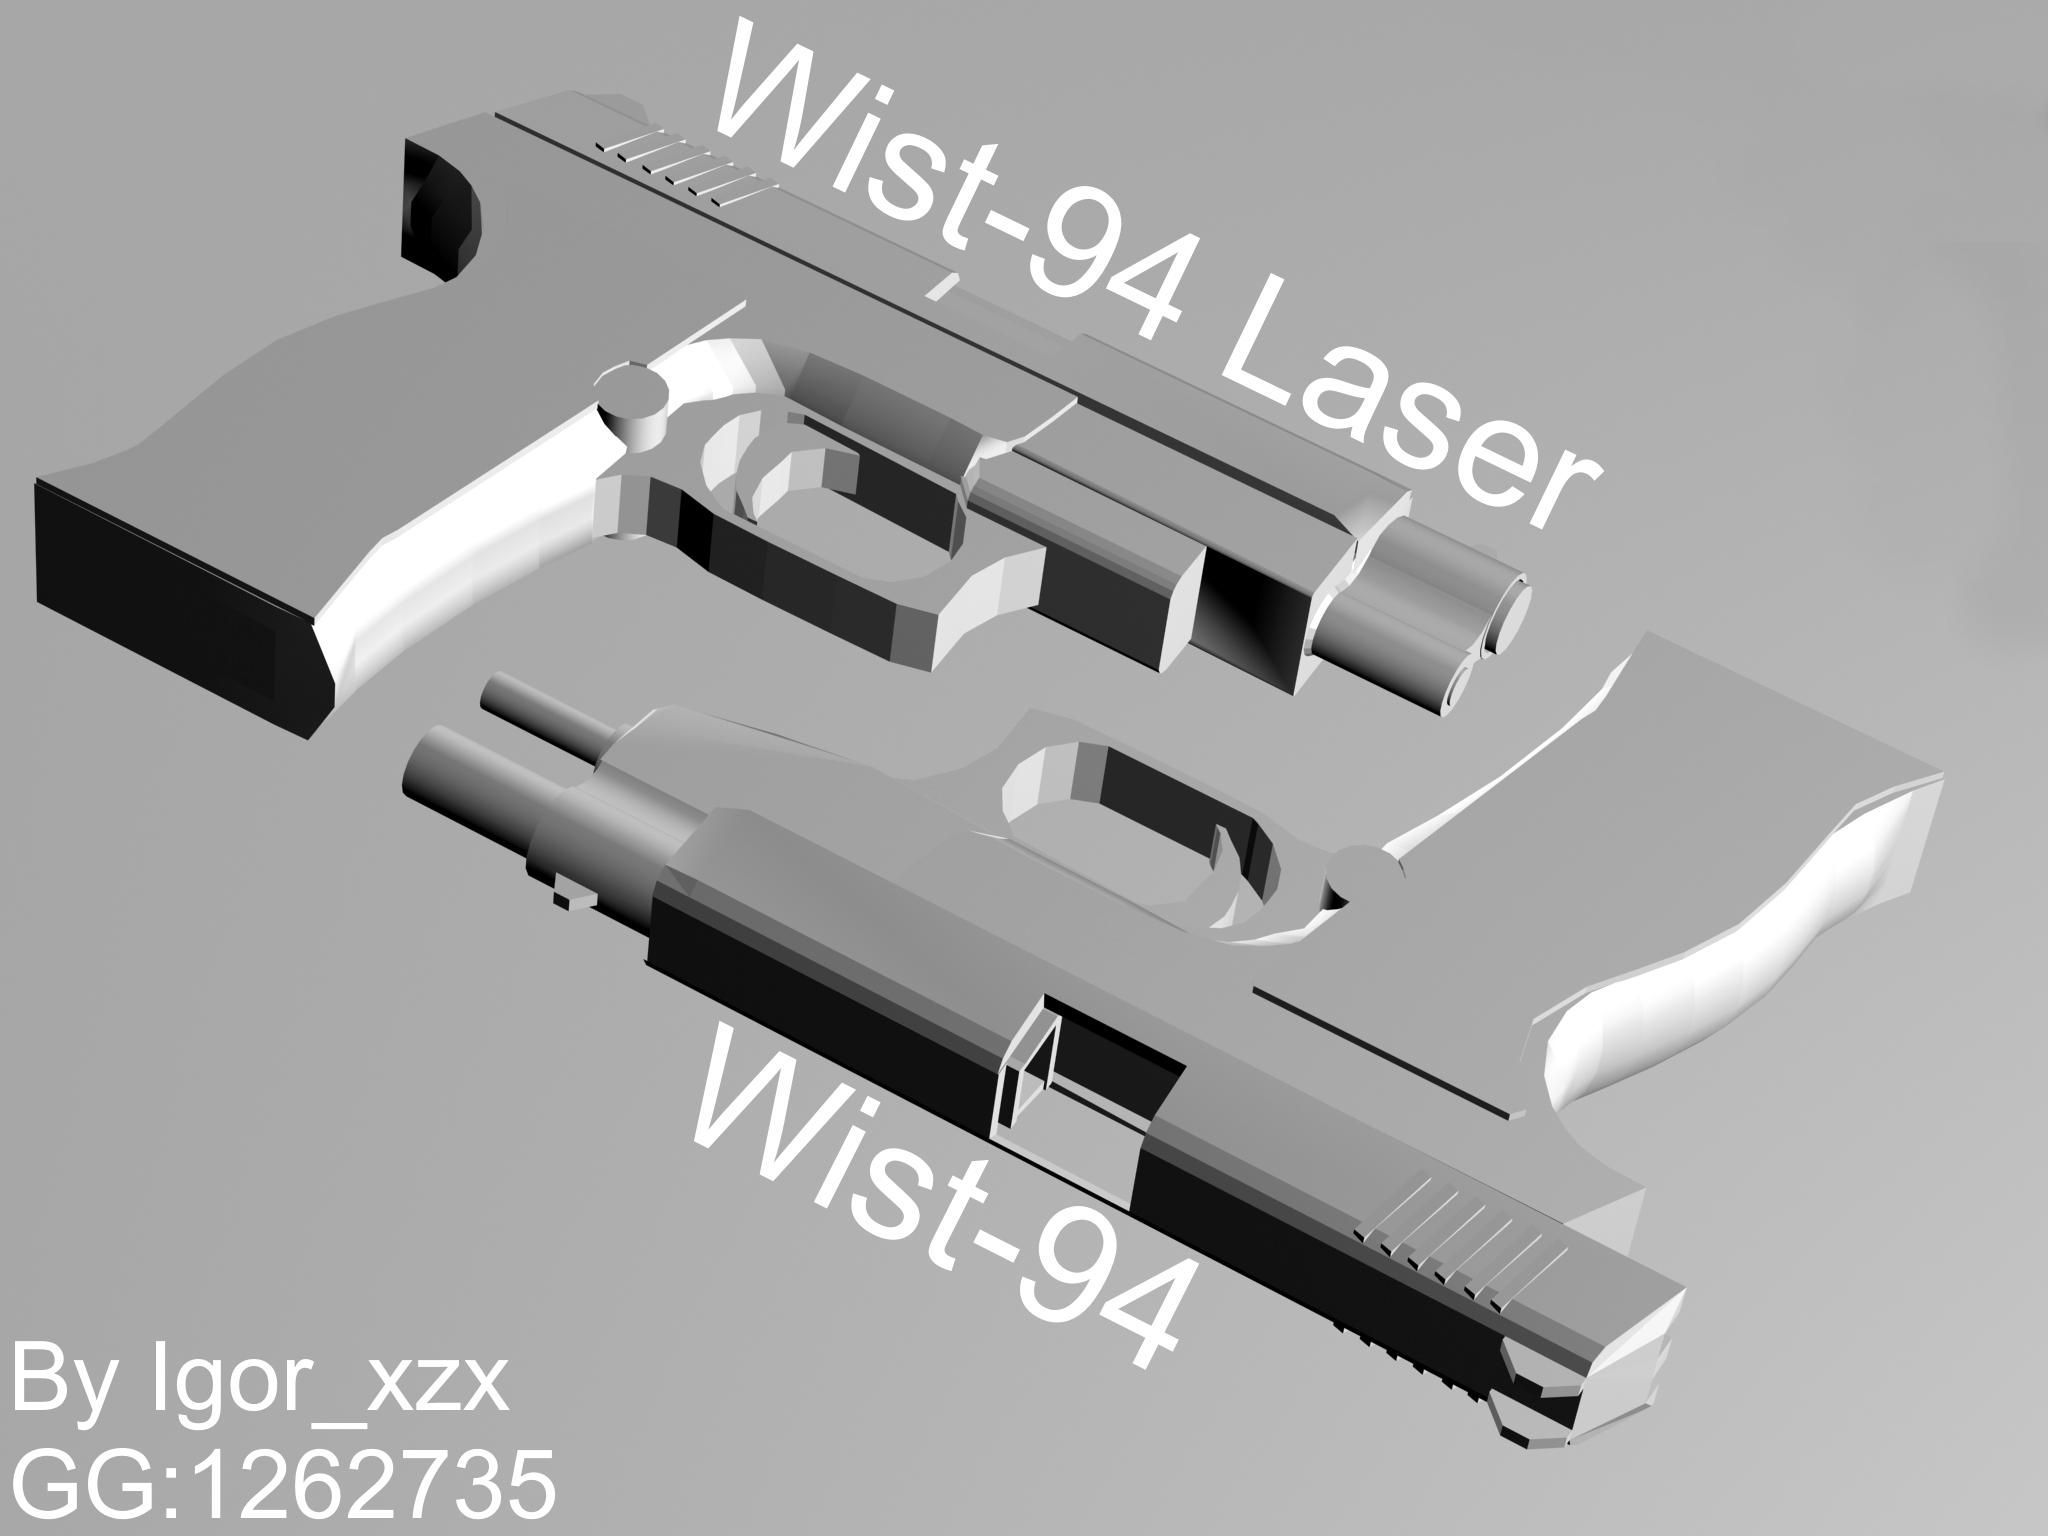 Wist-94 (WIP)